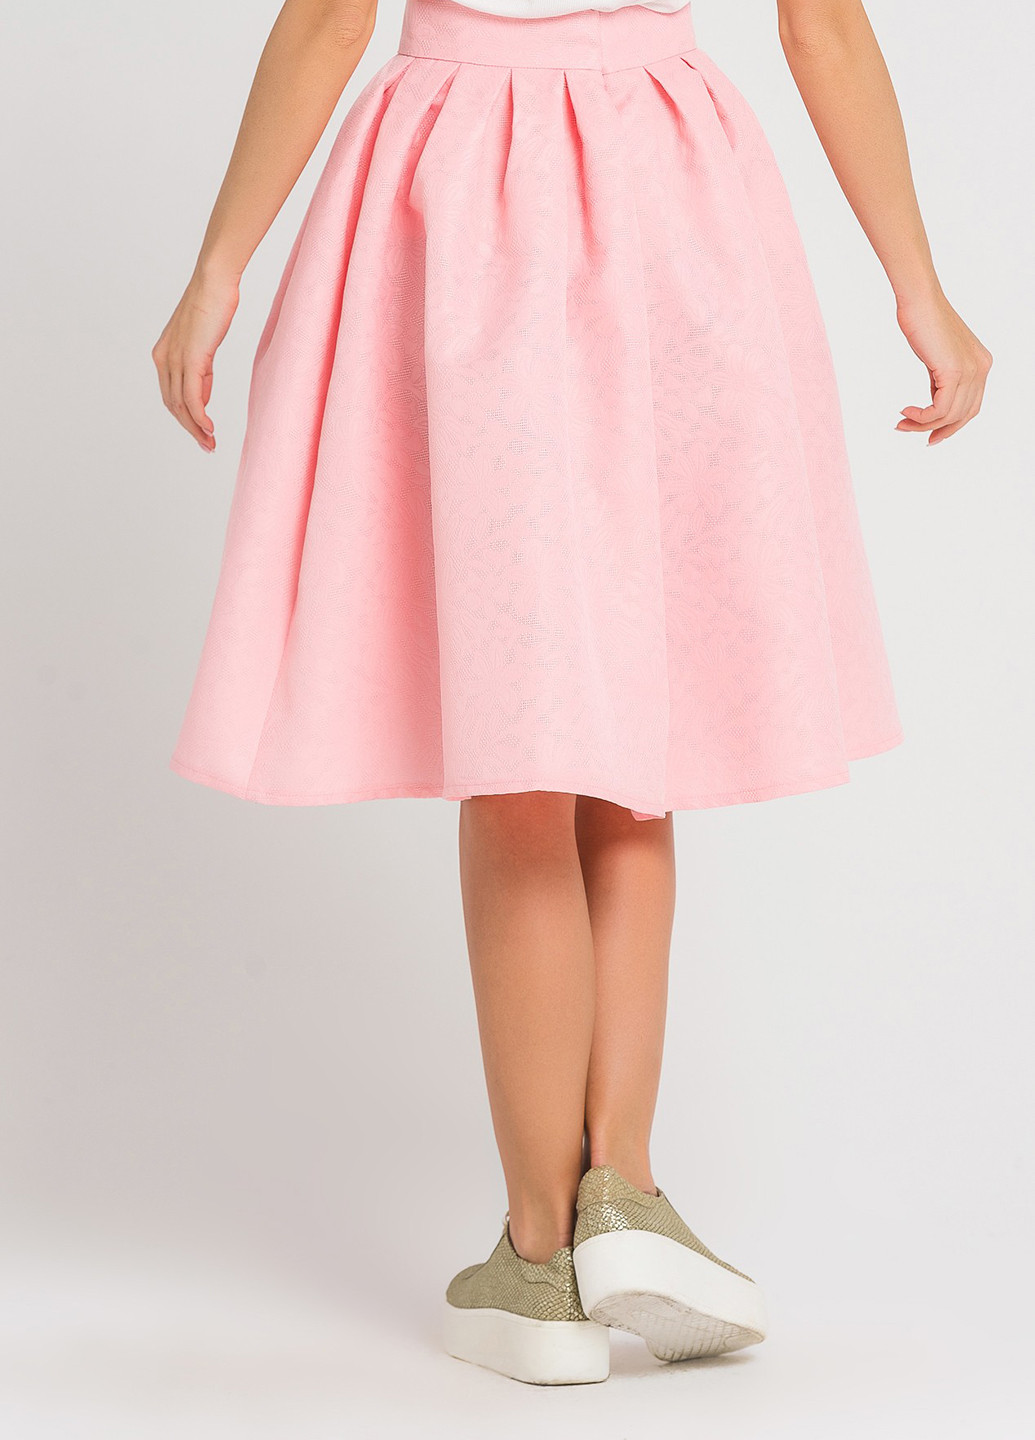 Светло-розовая кэжуал юбка Vovk клешированная